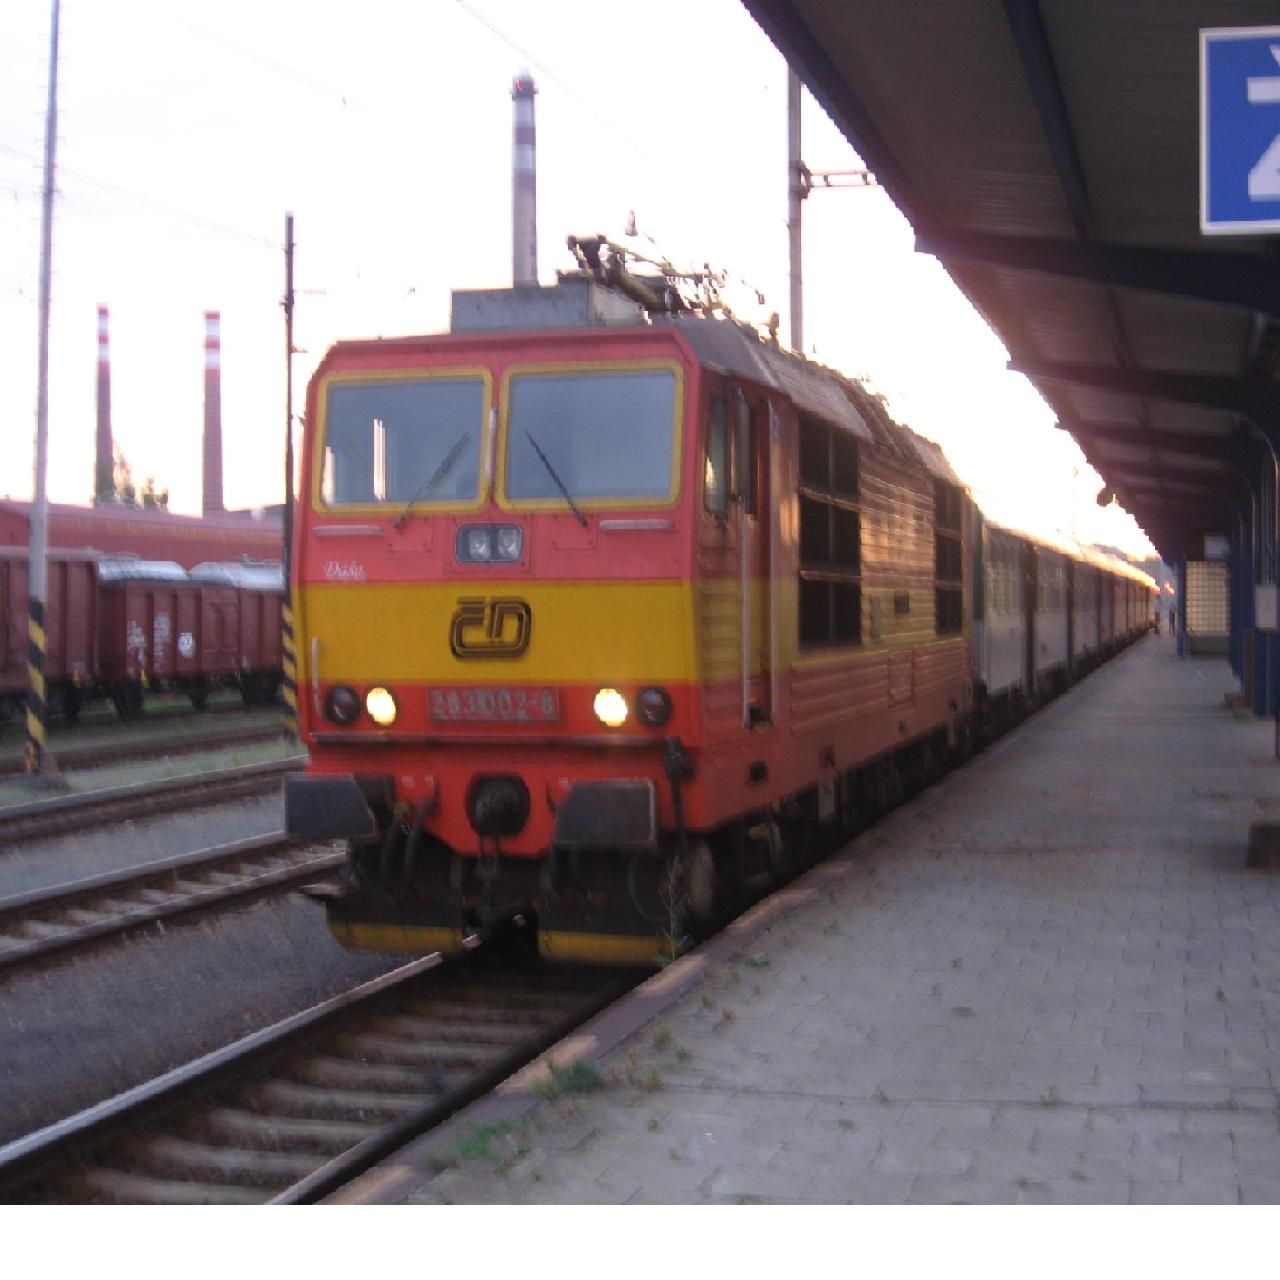 Da 263.002 v ele osobnho vlaku na Brno ek na odjezd ve ru nad Szavou.